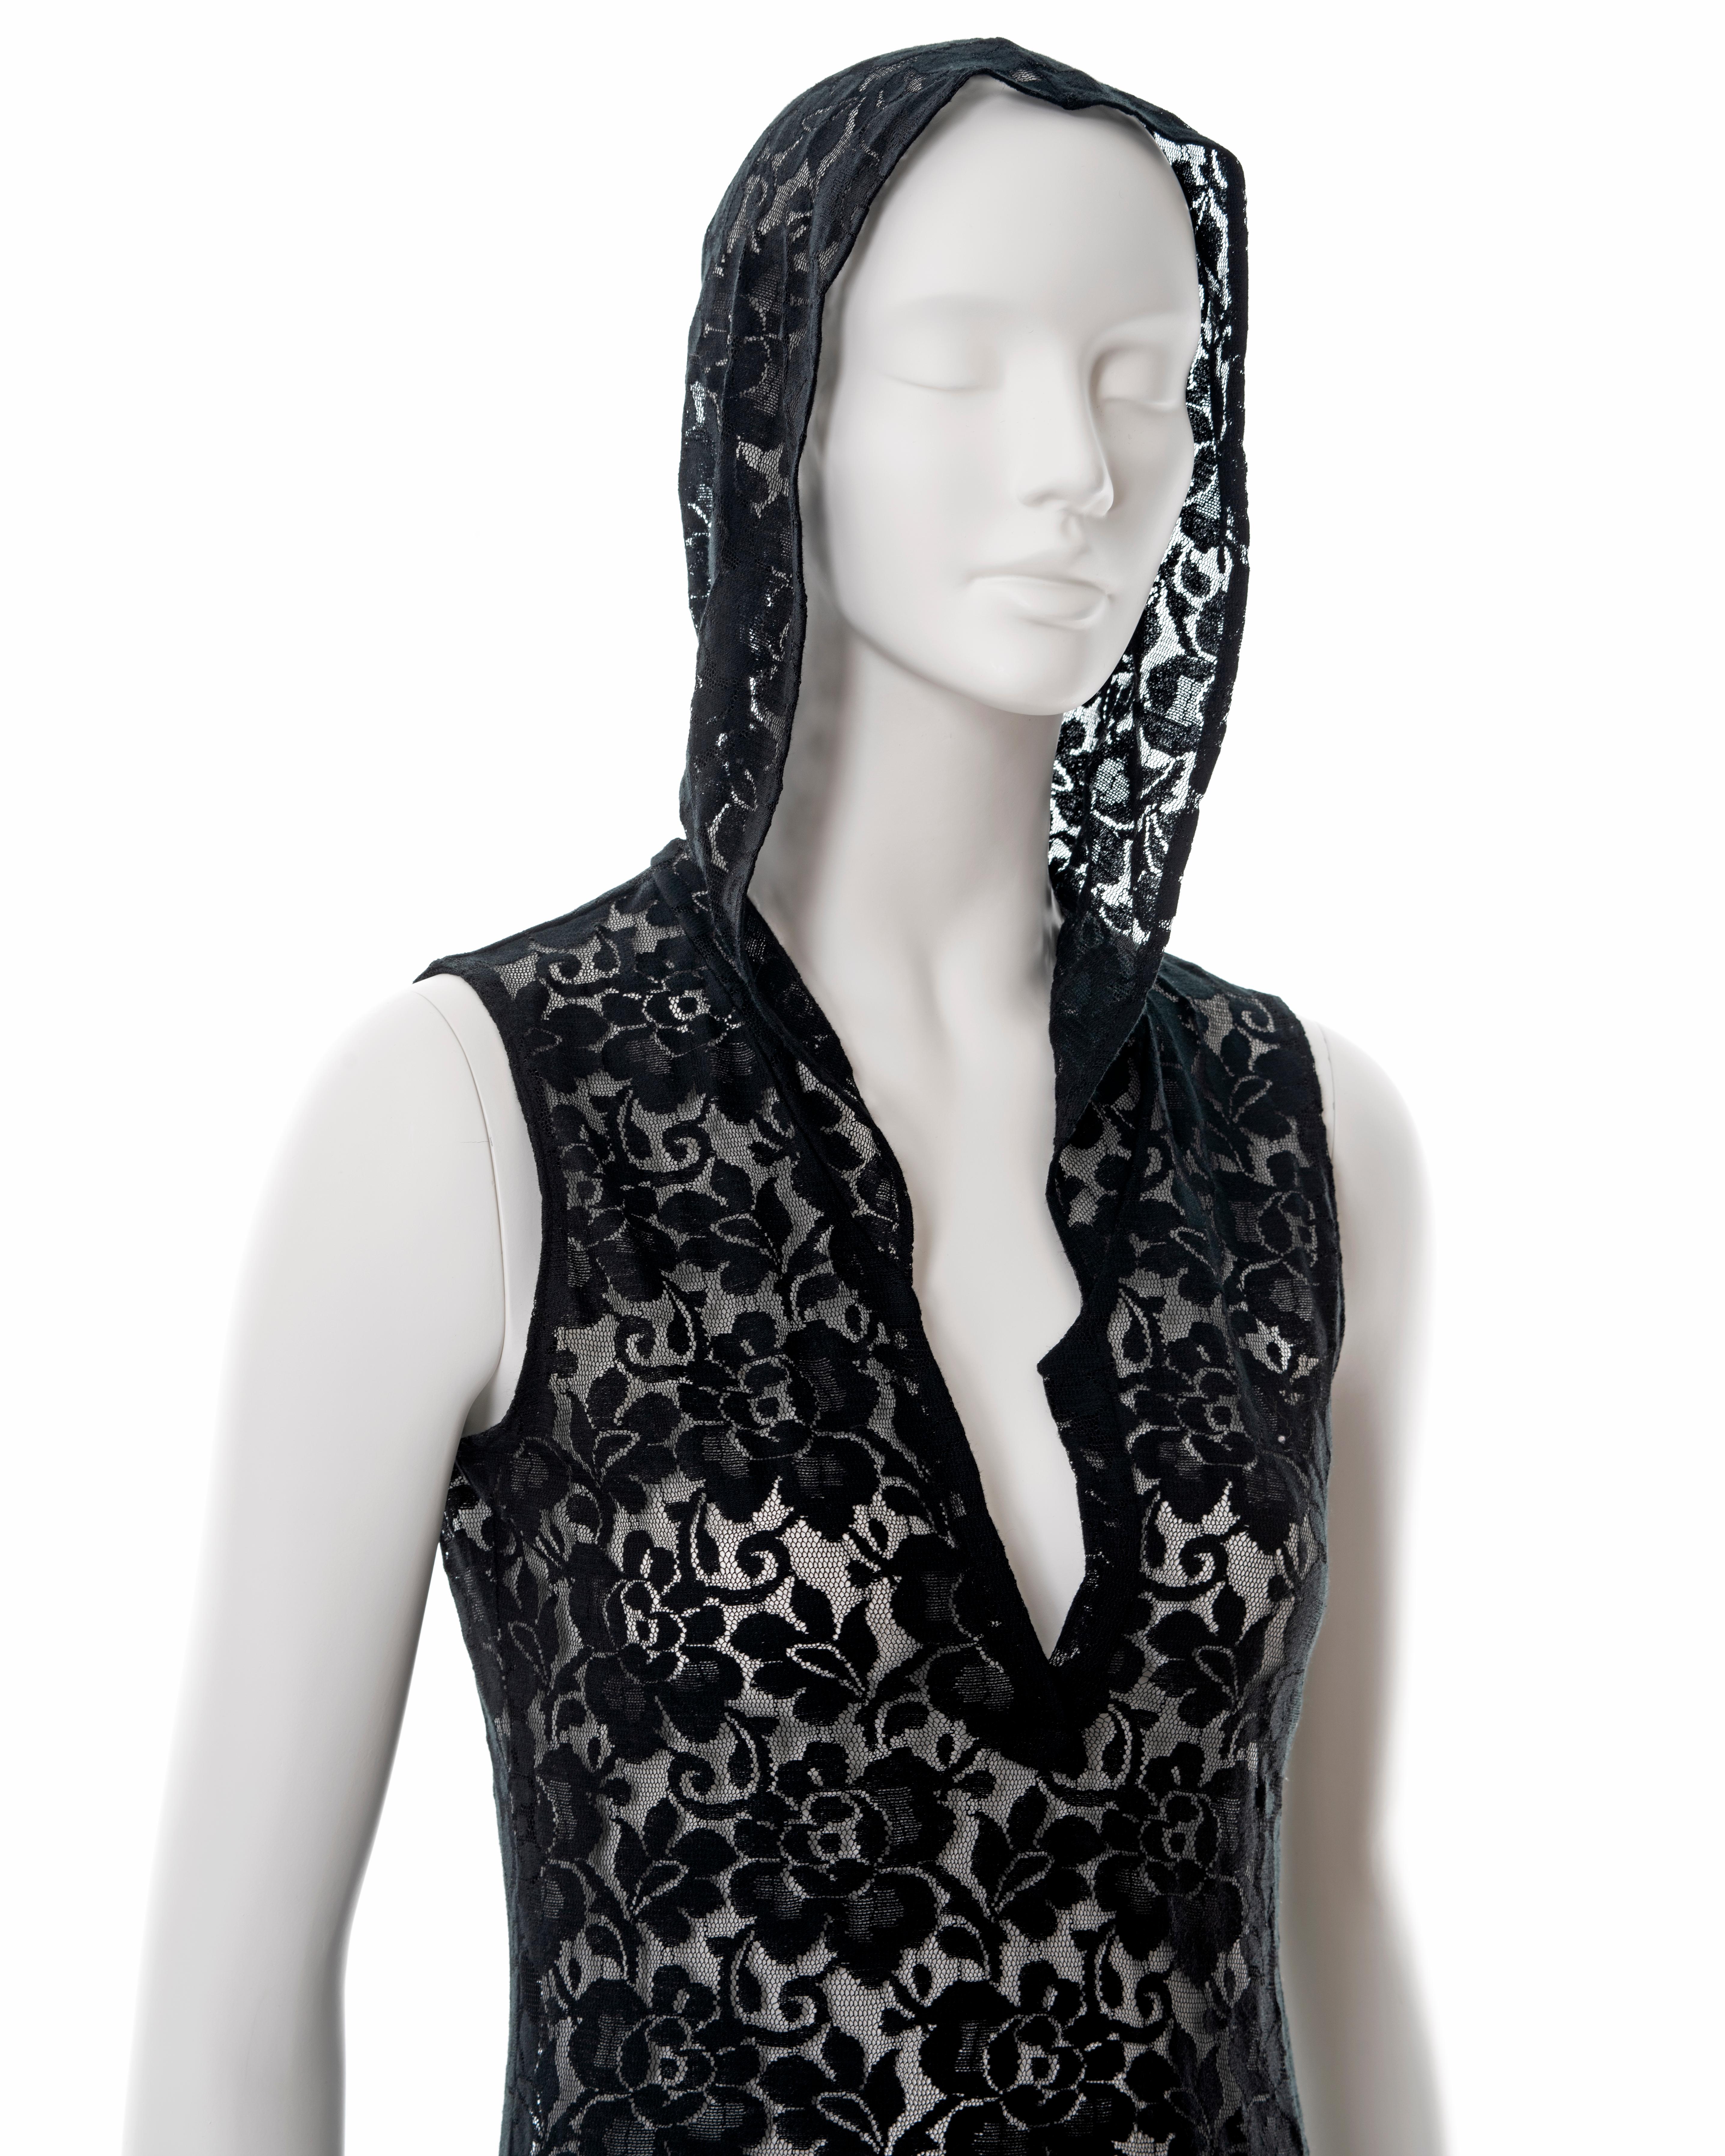 Helmut Lang black lace hooded shift dress, ss 1996 For Sale 2